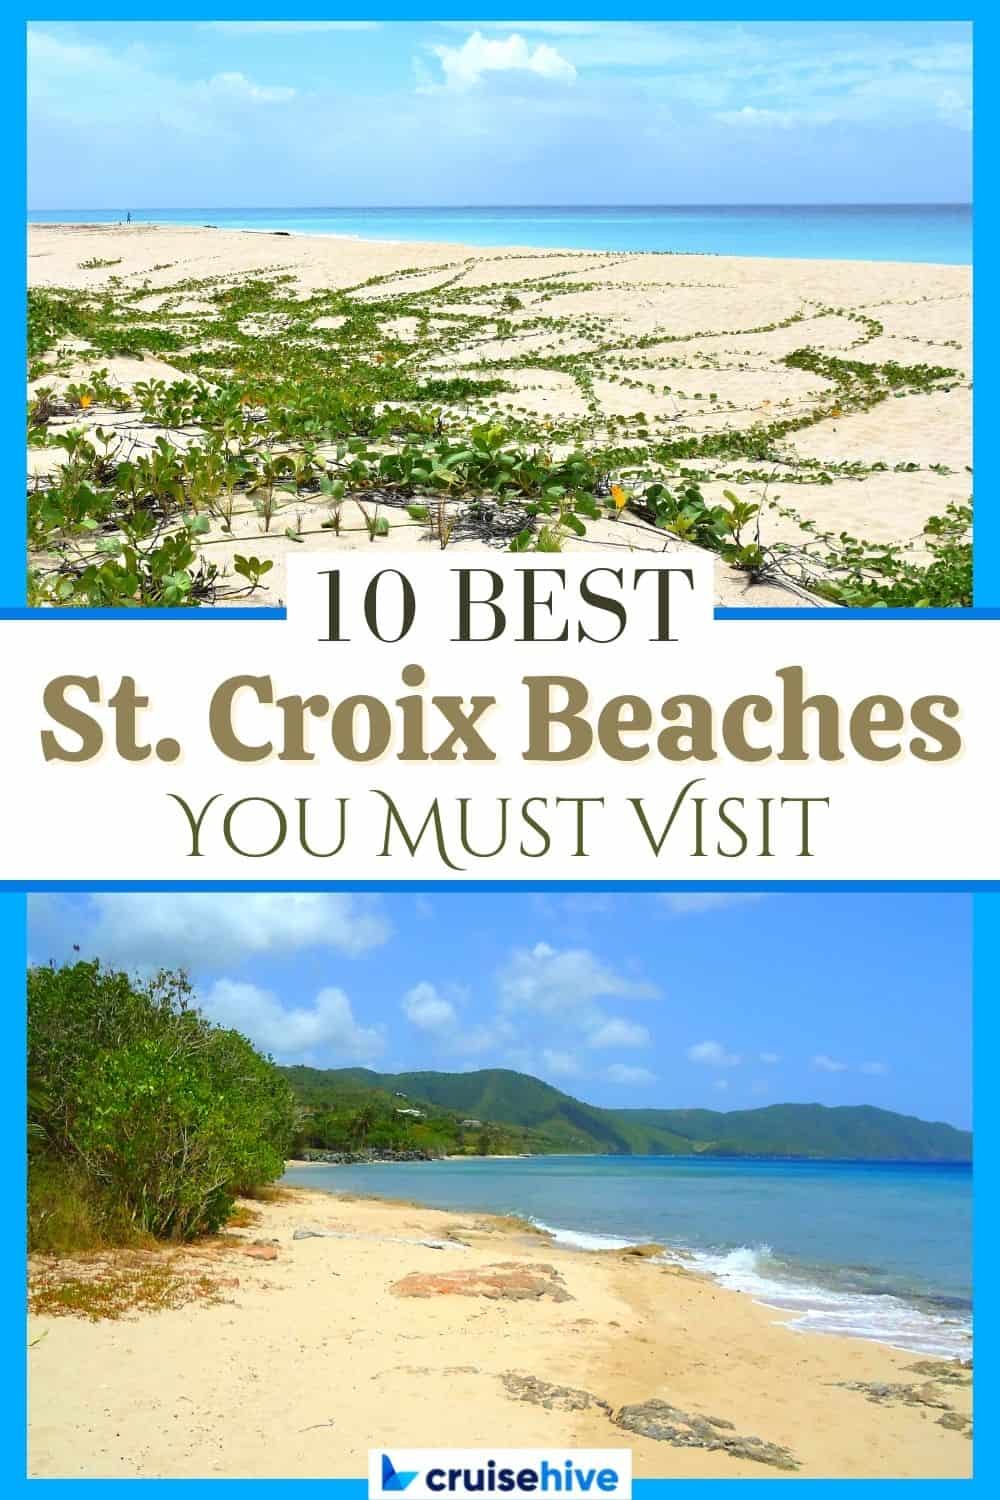 St. Croix Beaches